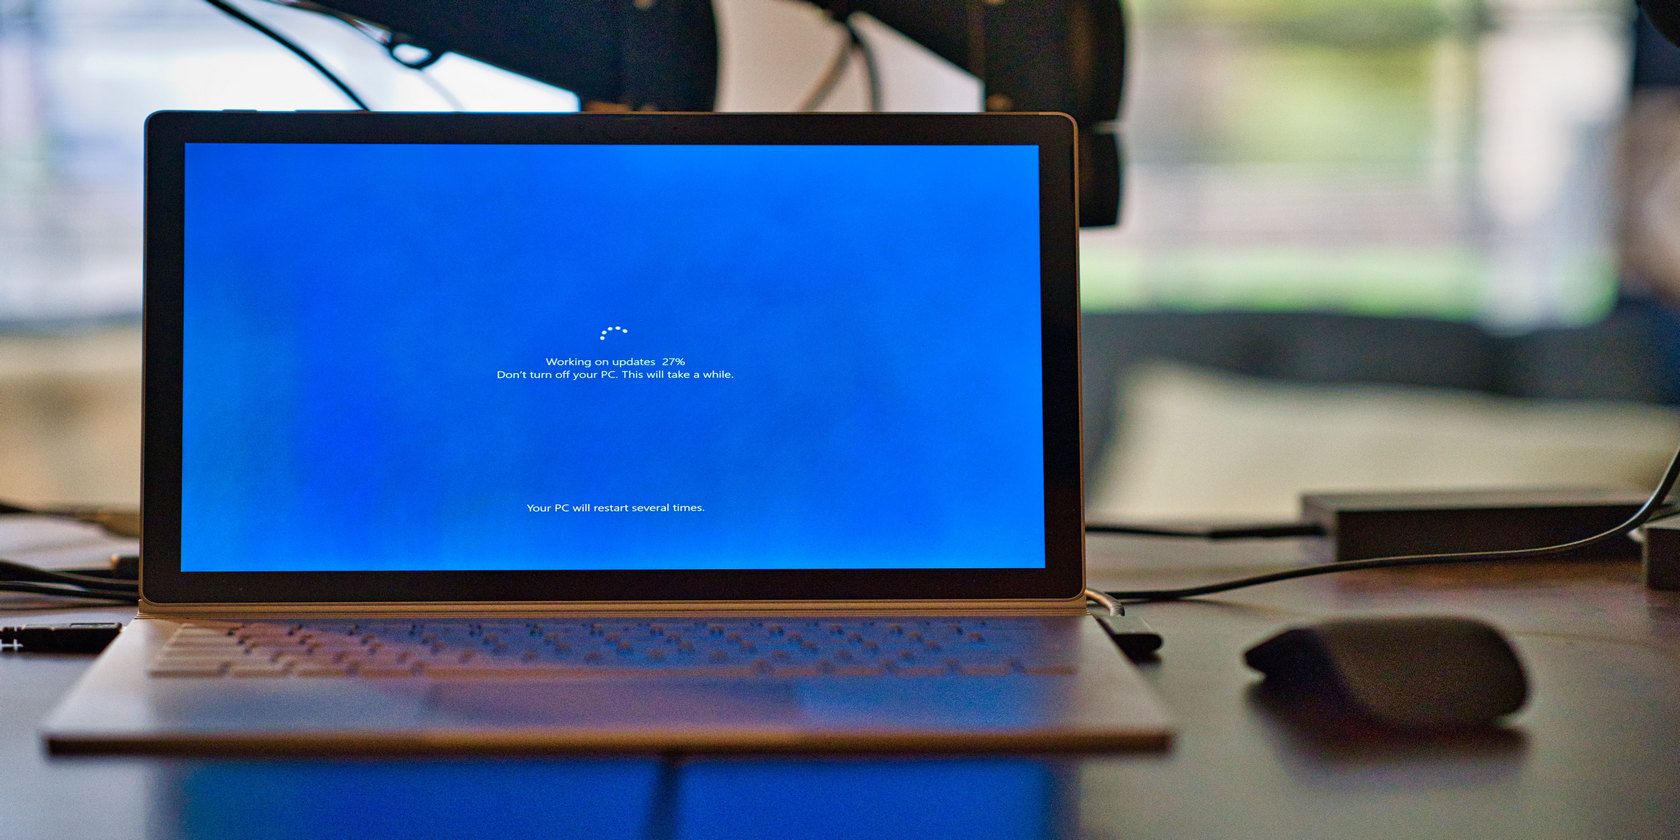 Blue Windows update screen on a laptop